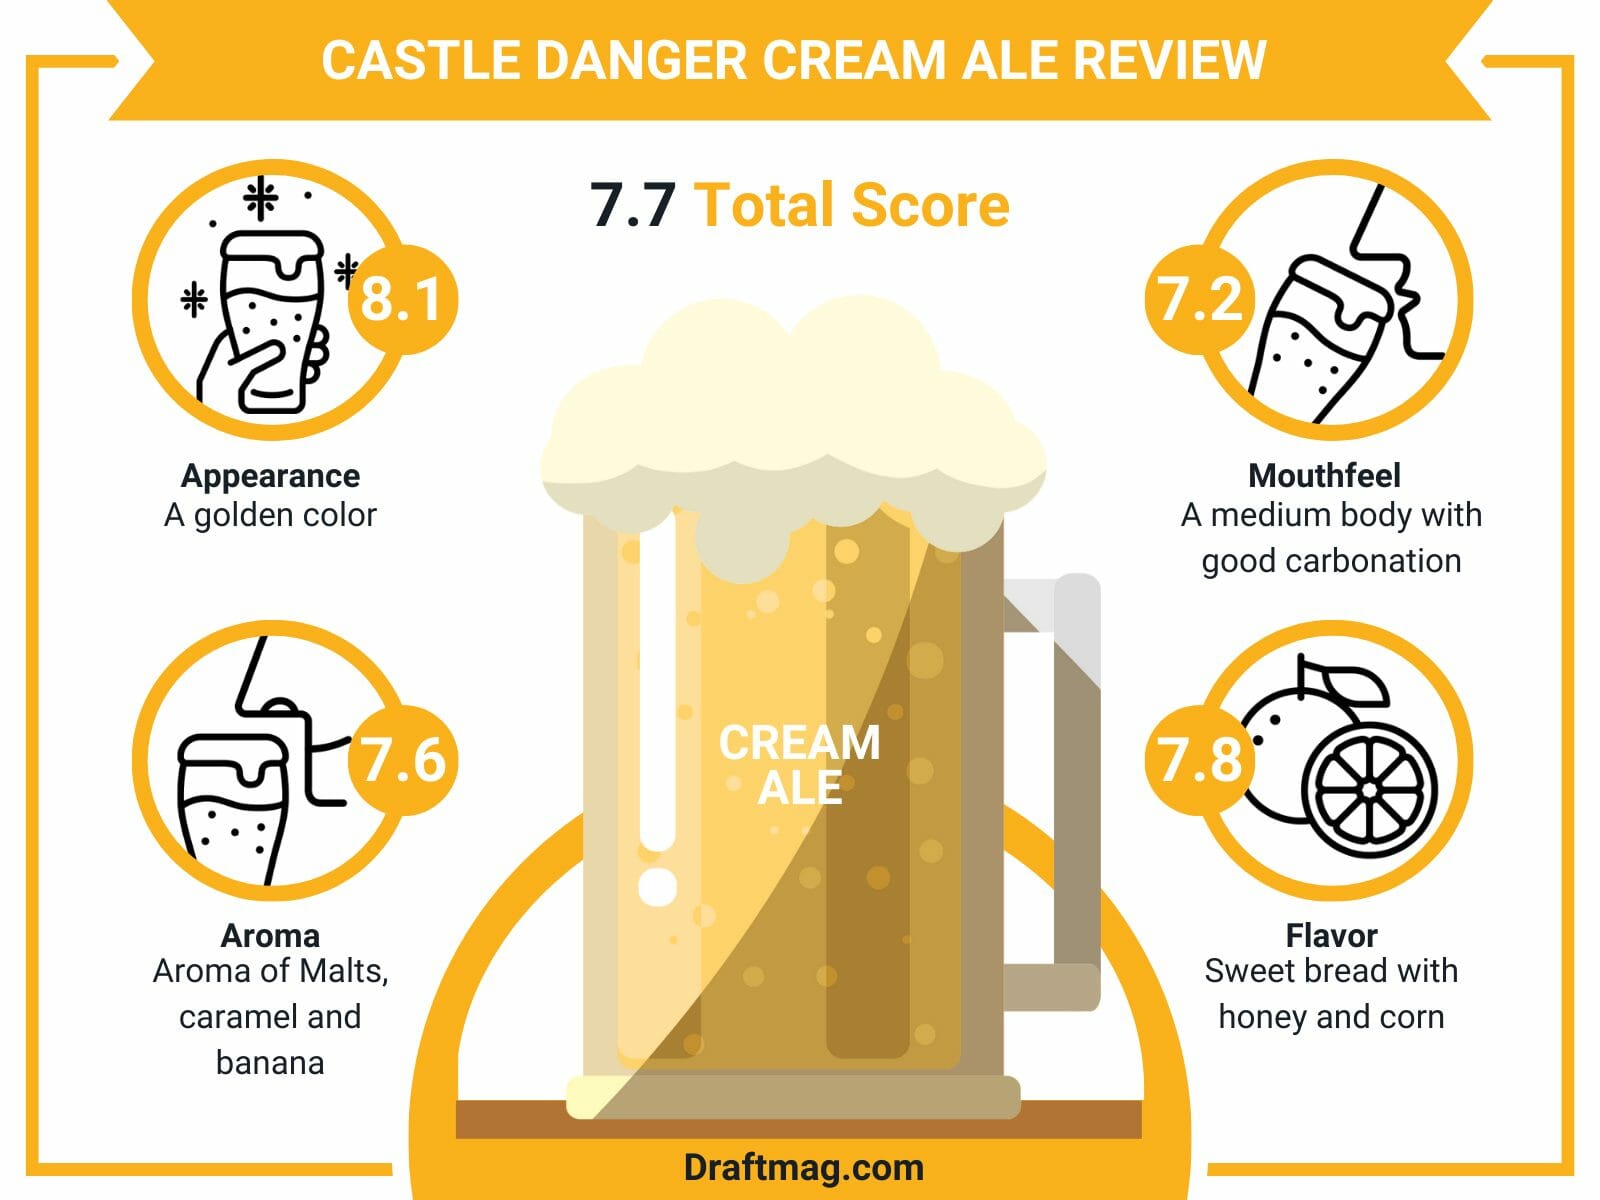 Castle danger cream ale review infographic